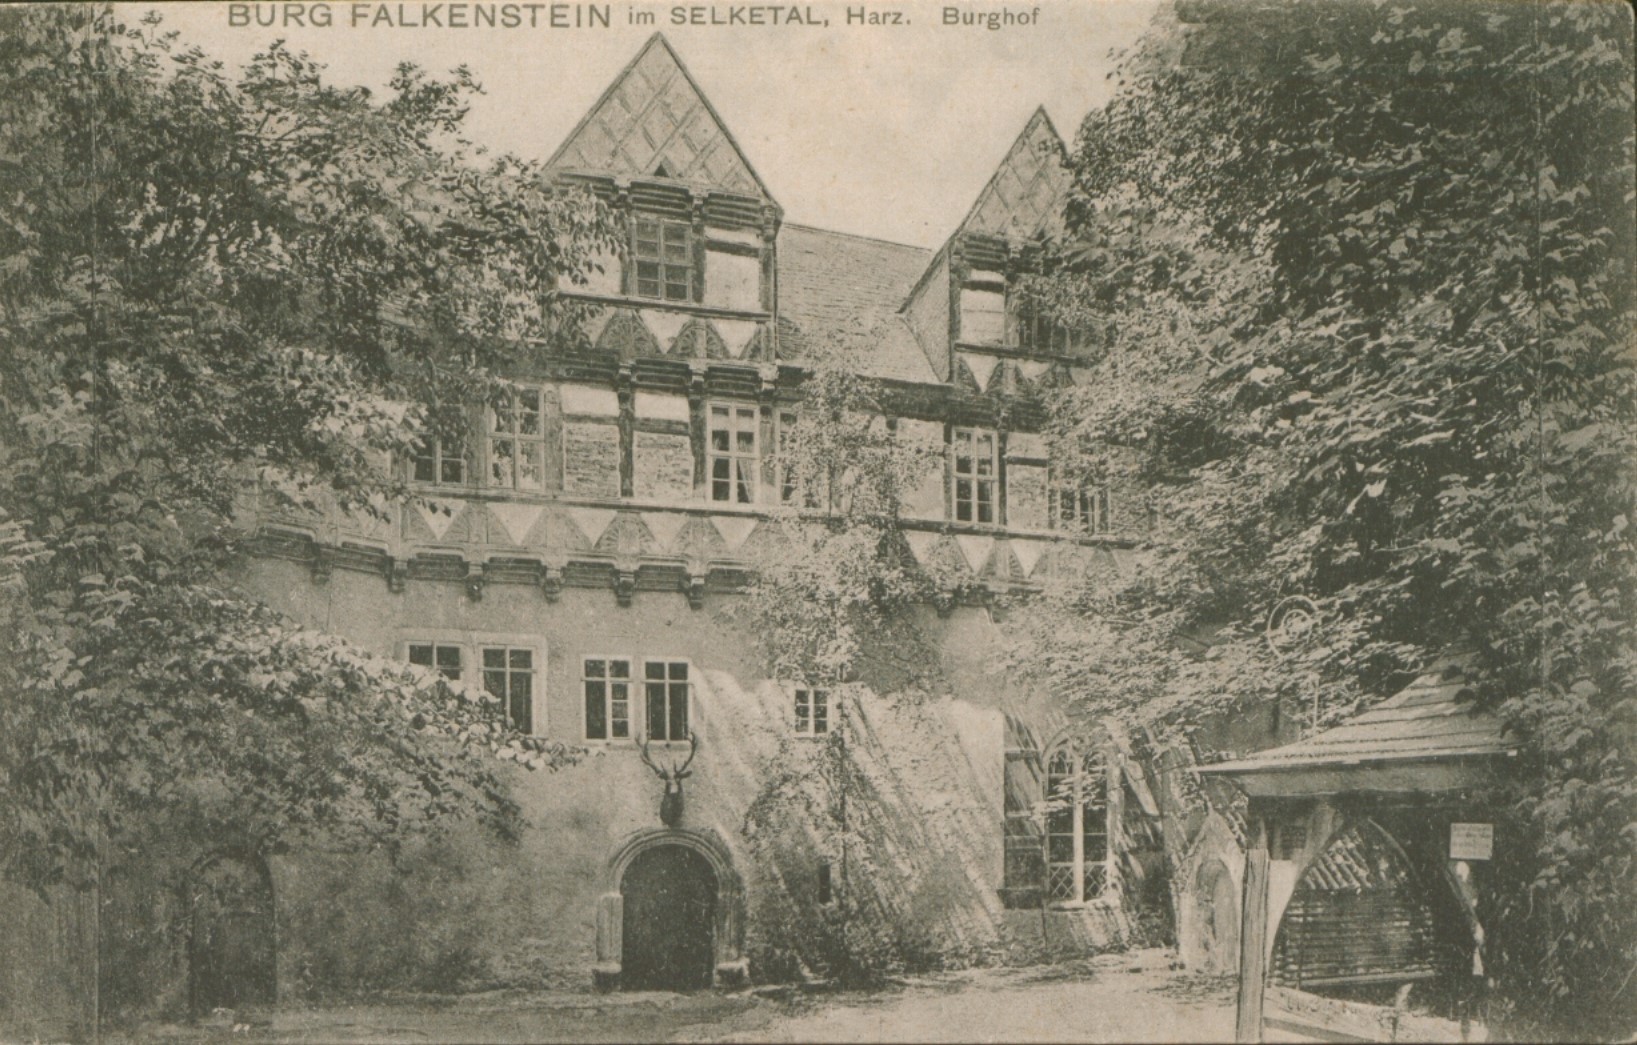 Ansichtskarte Burg Falkenstein im Selketal, Burghof. (Kulturstiftung Sachsen-Anhalt CC BY-NC-SA)